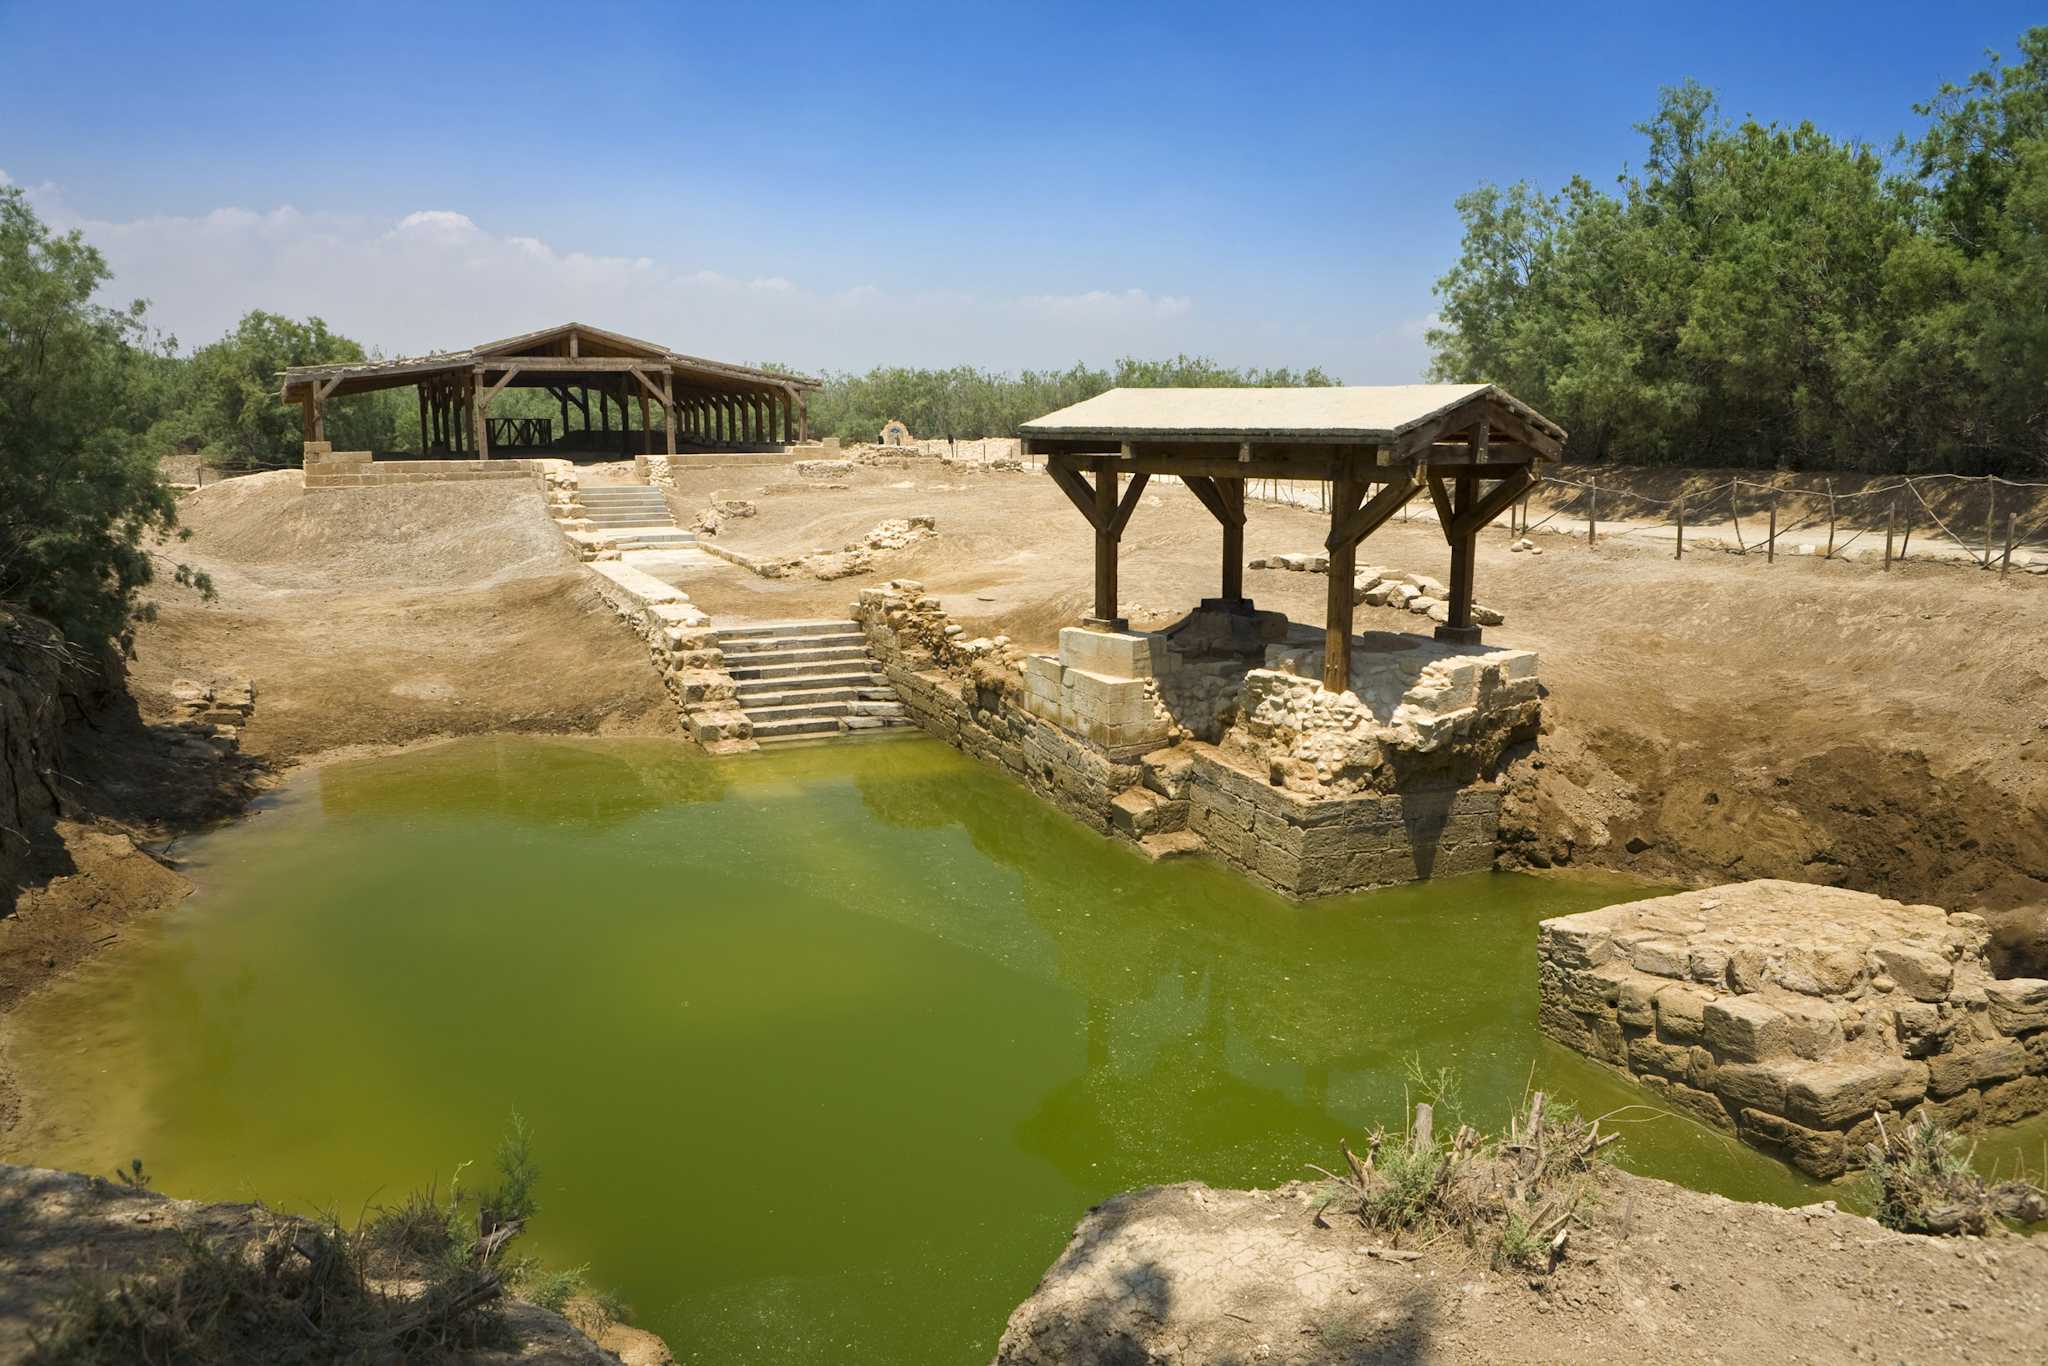 The Baptism Site of Jesus Christ